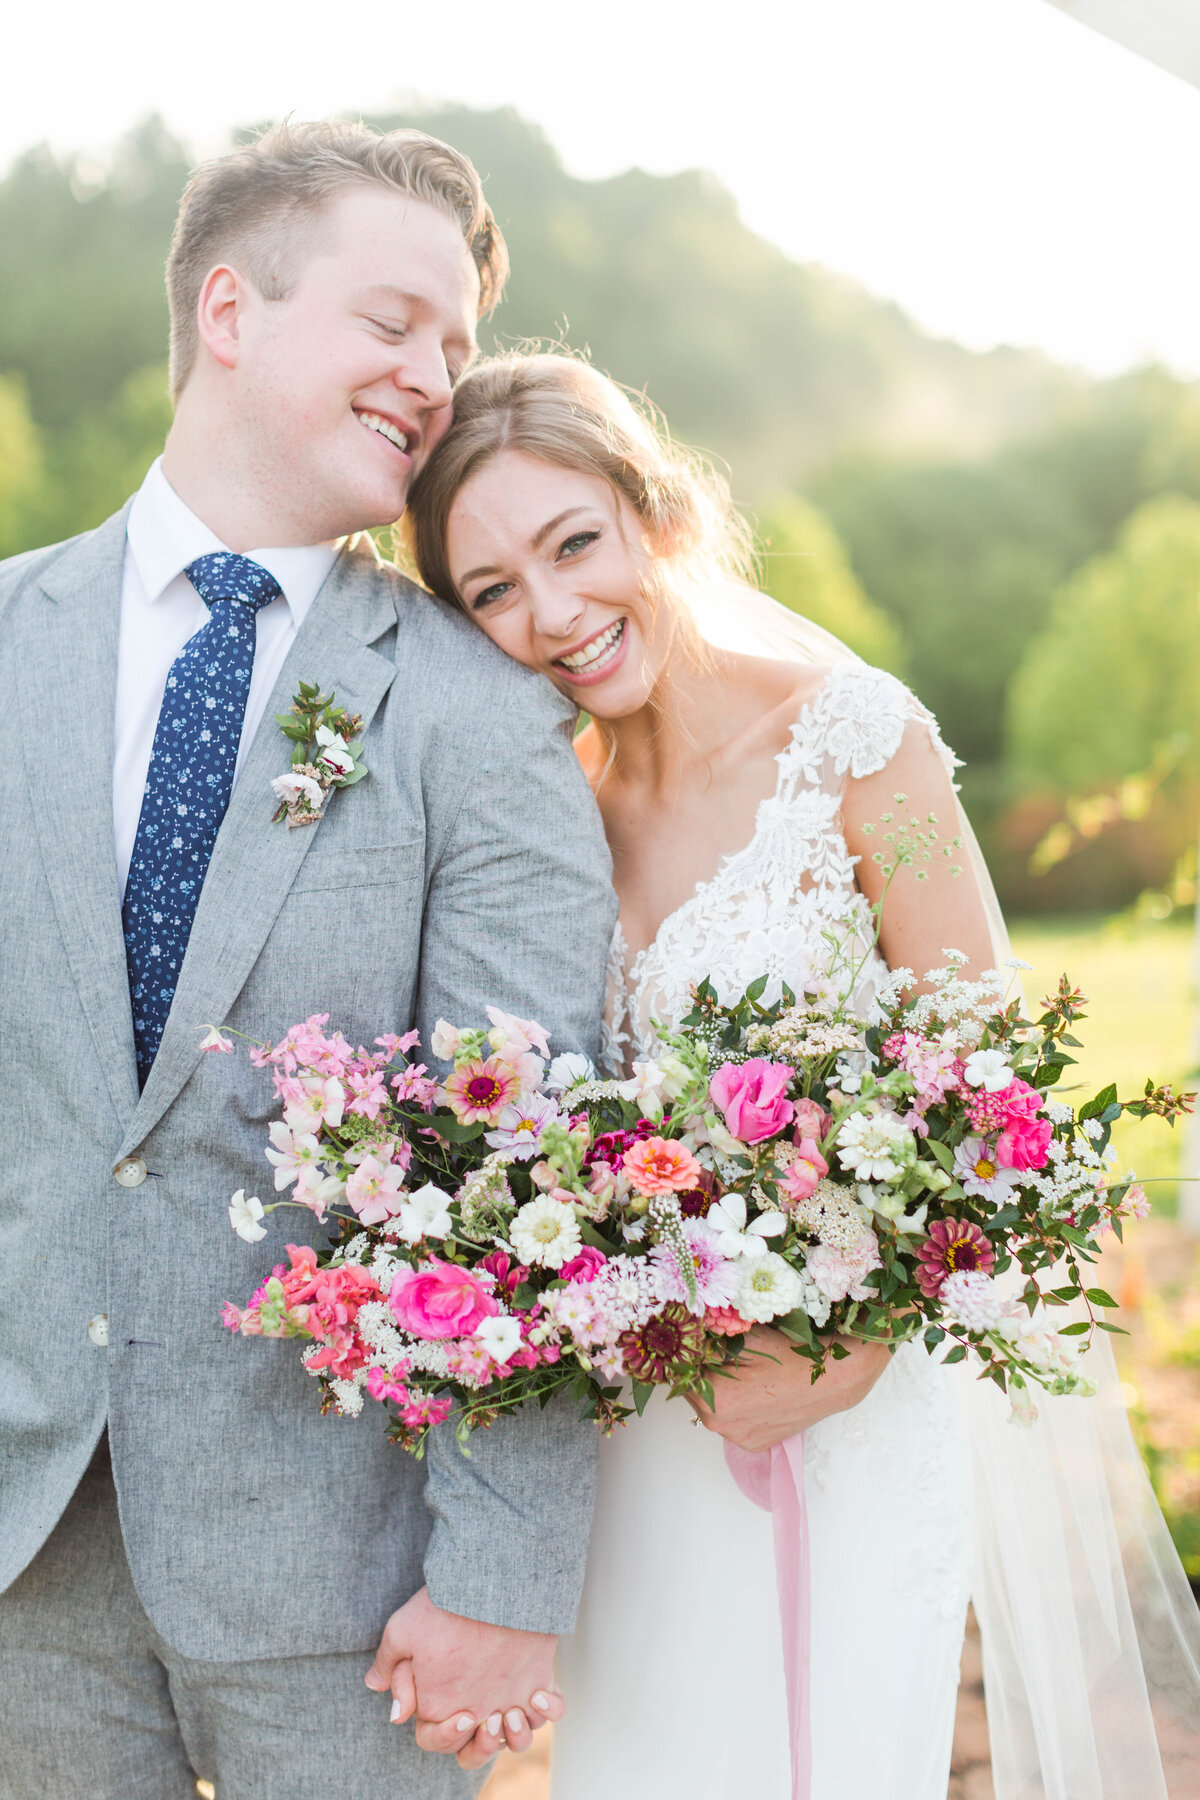 Belle Garden Estate wedding inspiration with  pink flowers